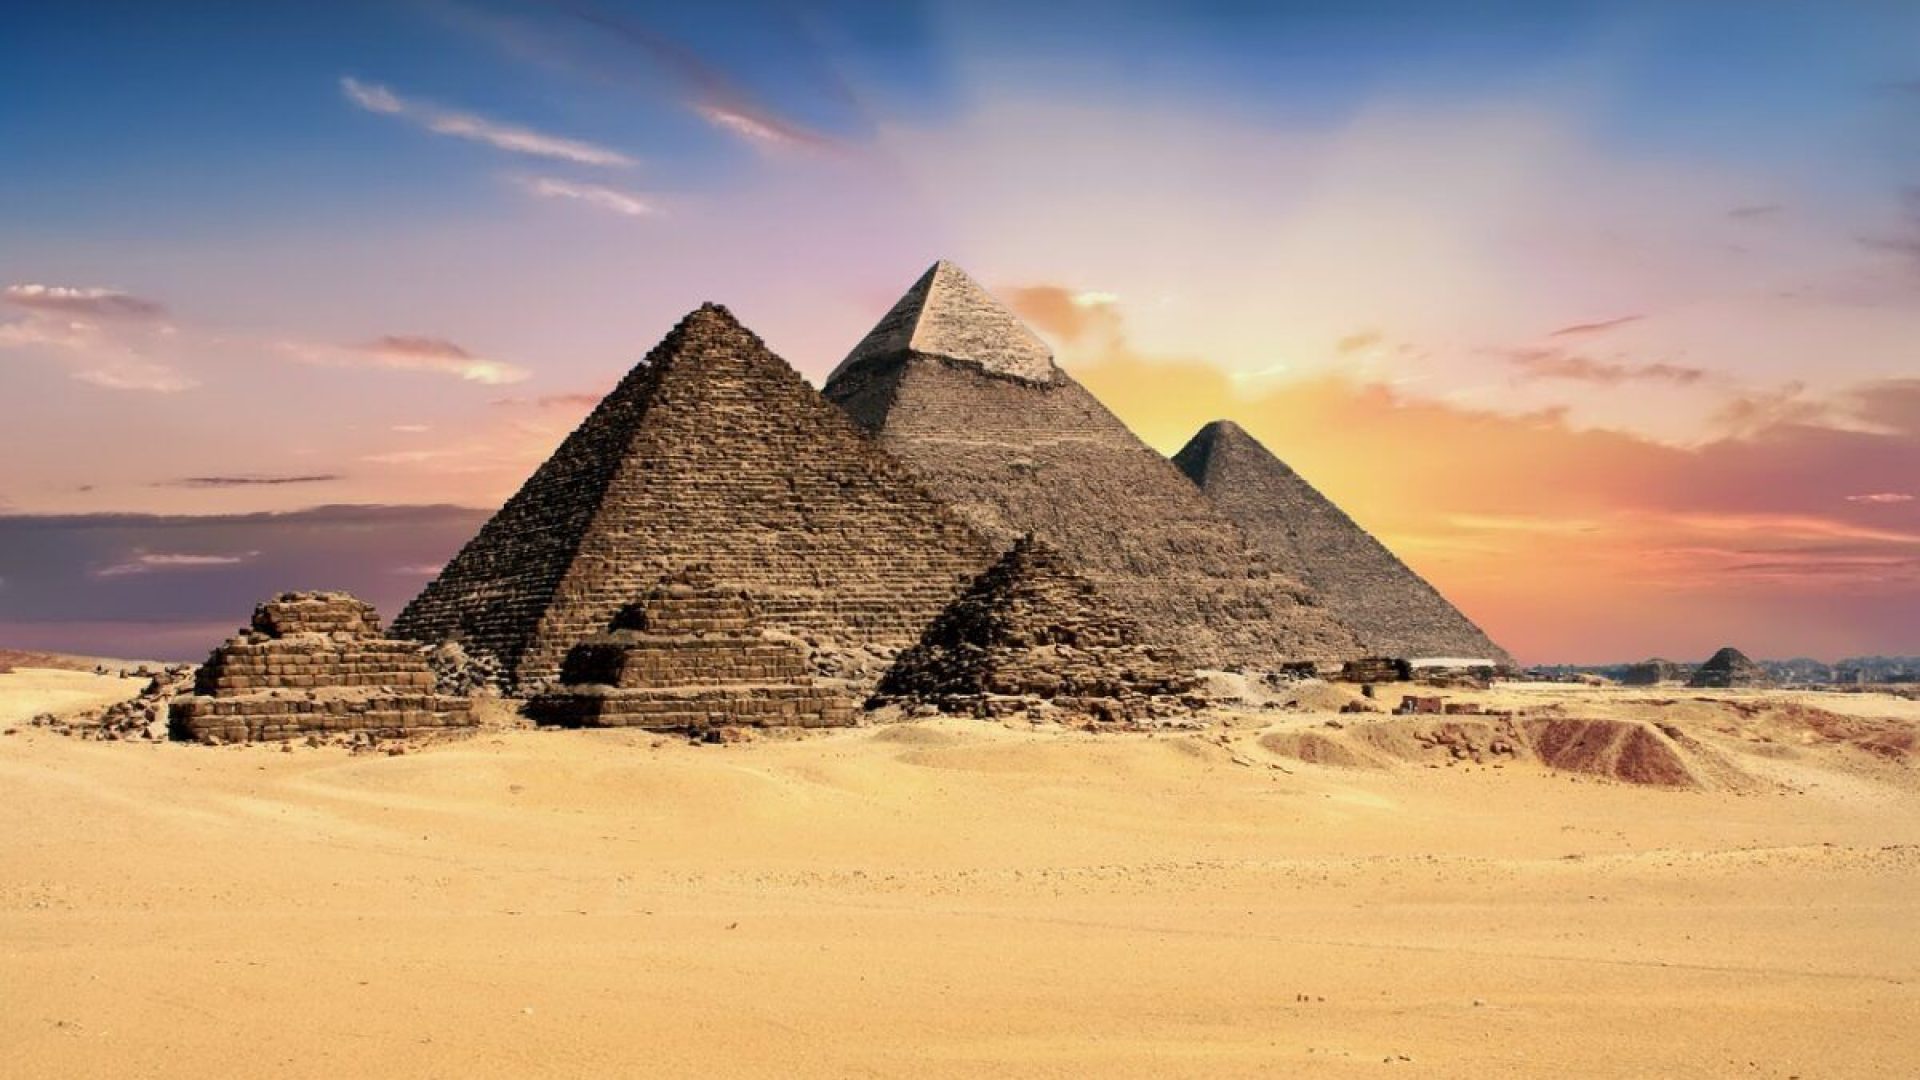 grande piramide